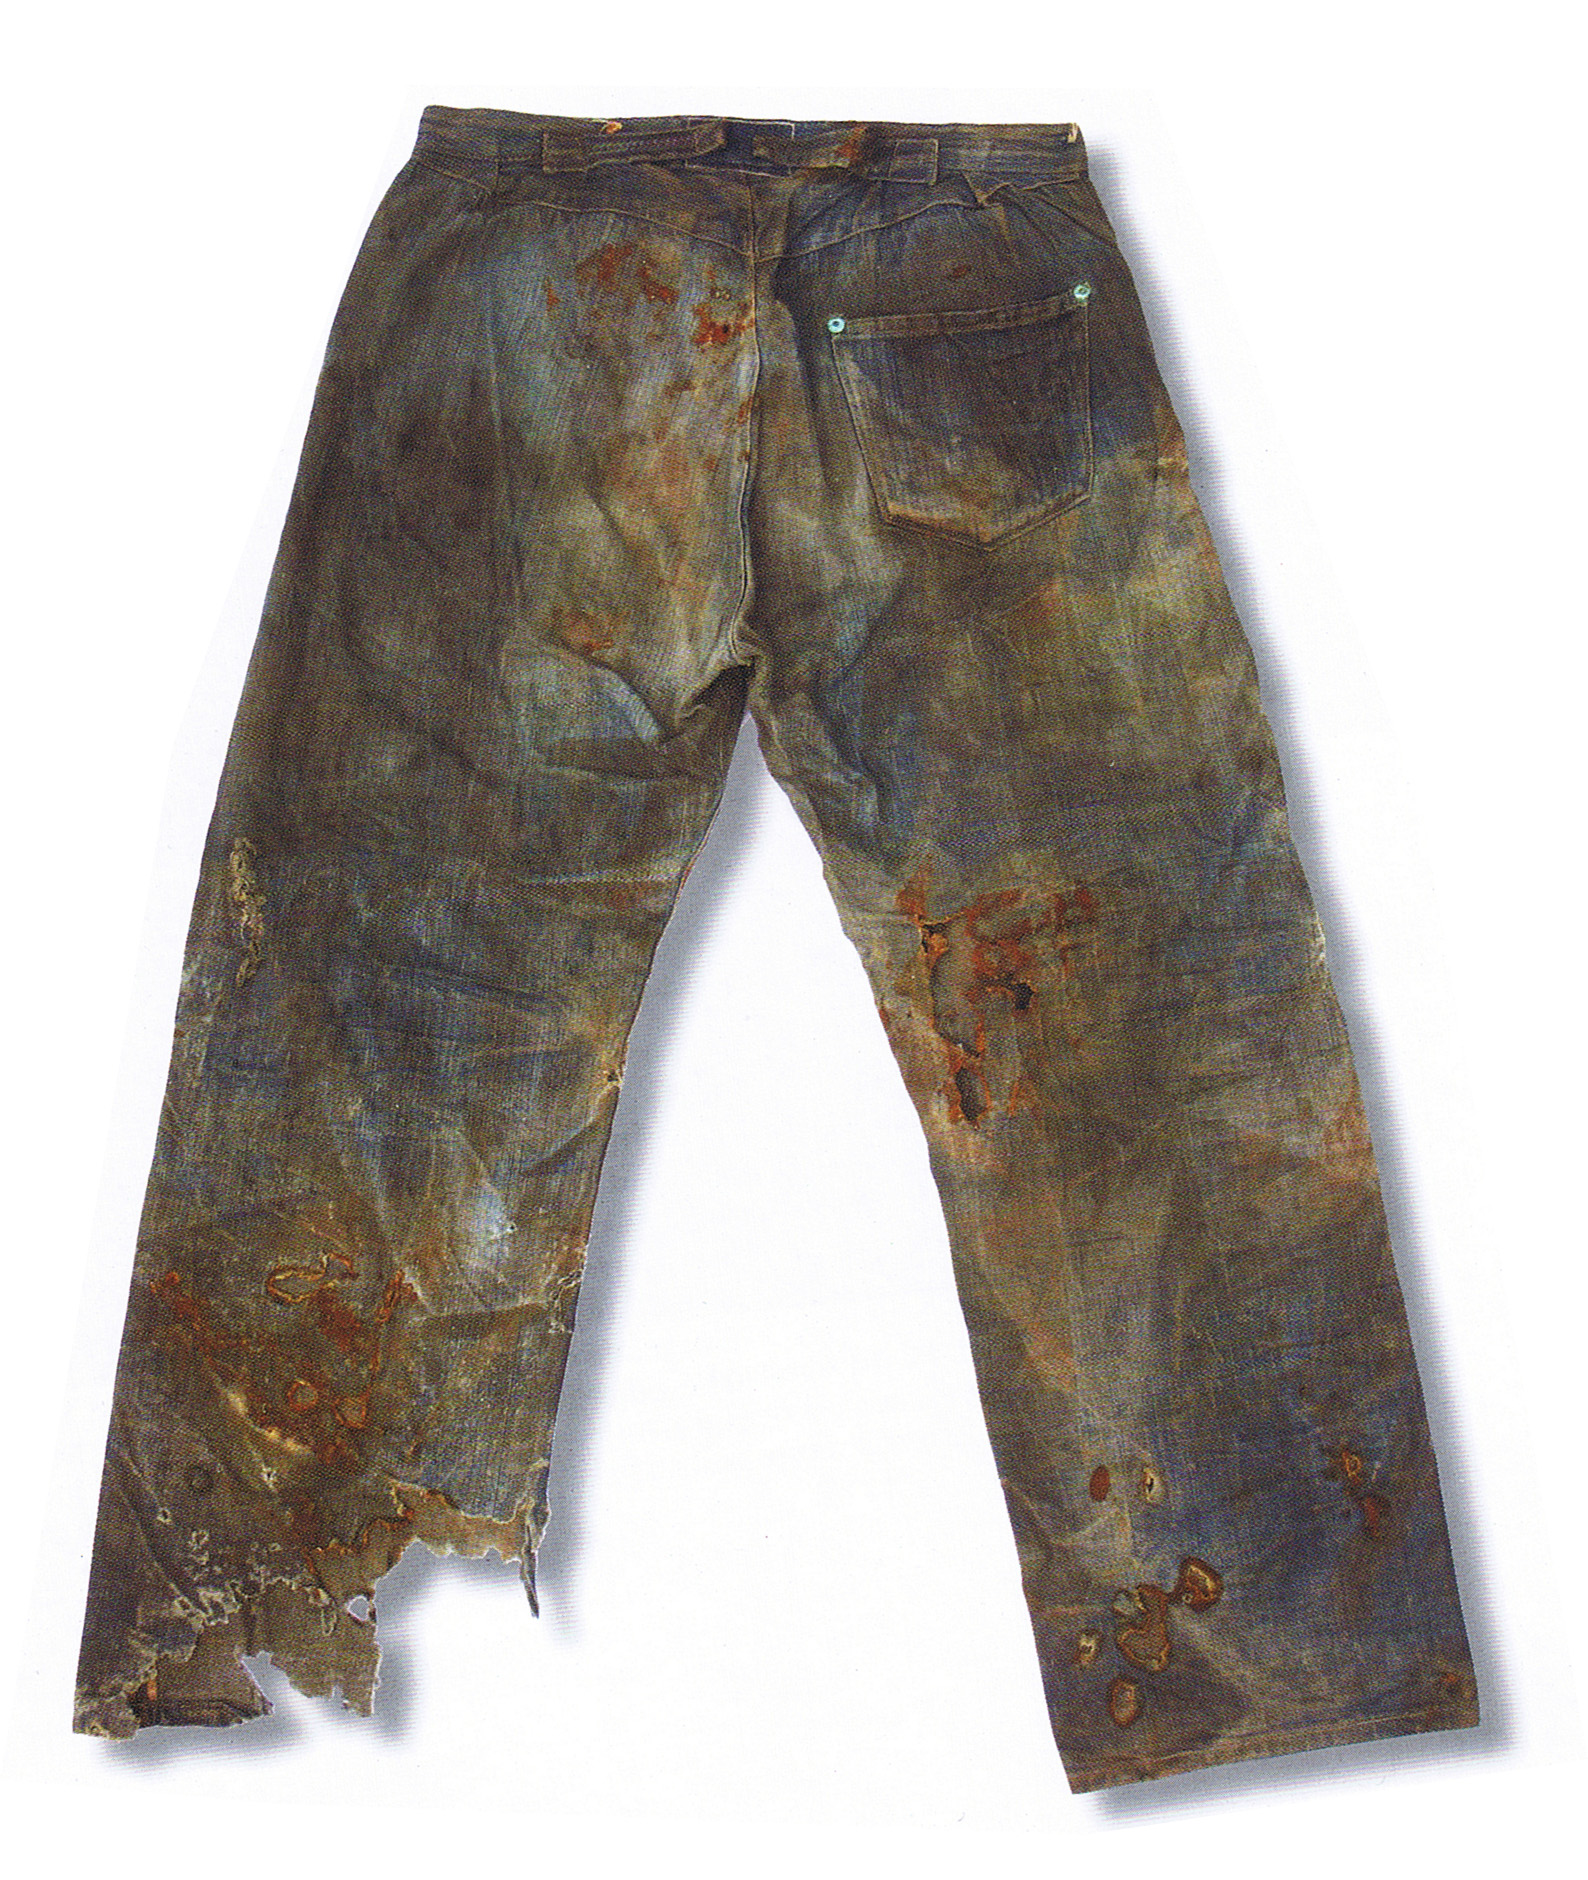 History of Denim - Origin of Denim and Blue Jeans